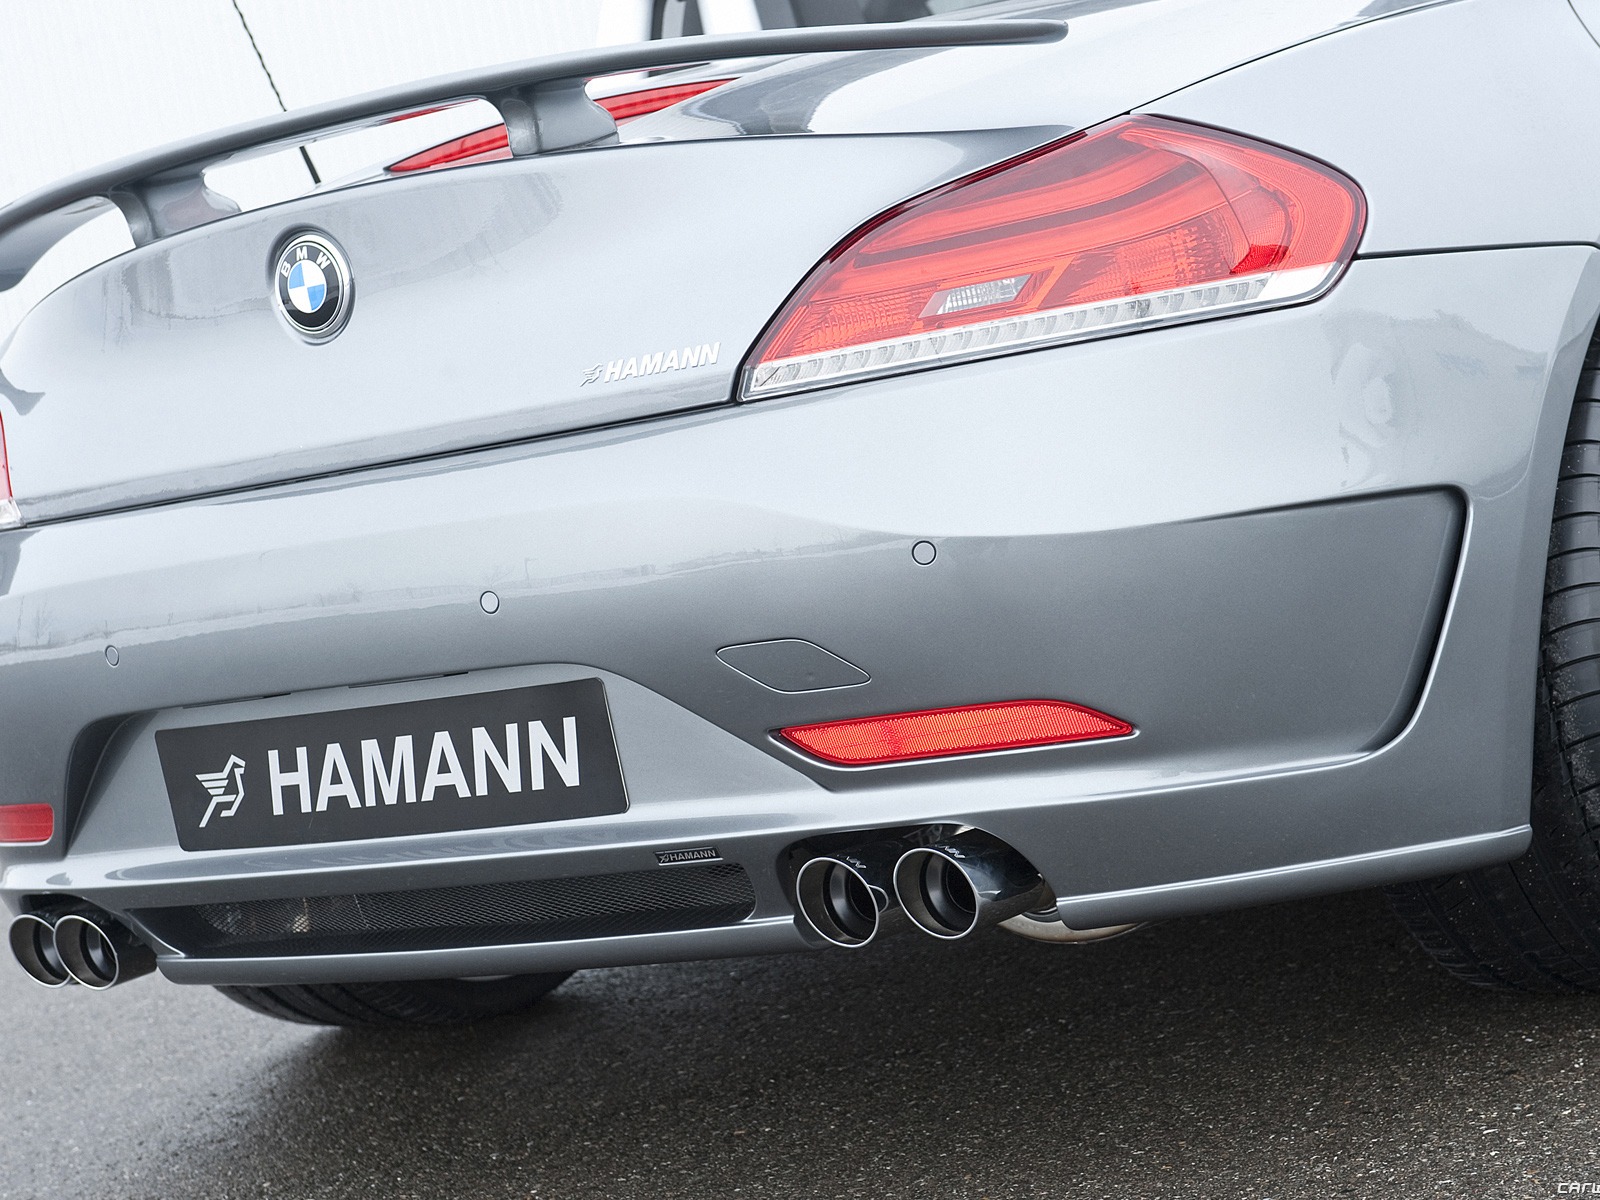 Hamann BMW Z4 E89 - 2010 寶馬 #19 - 1600x1200